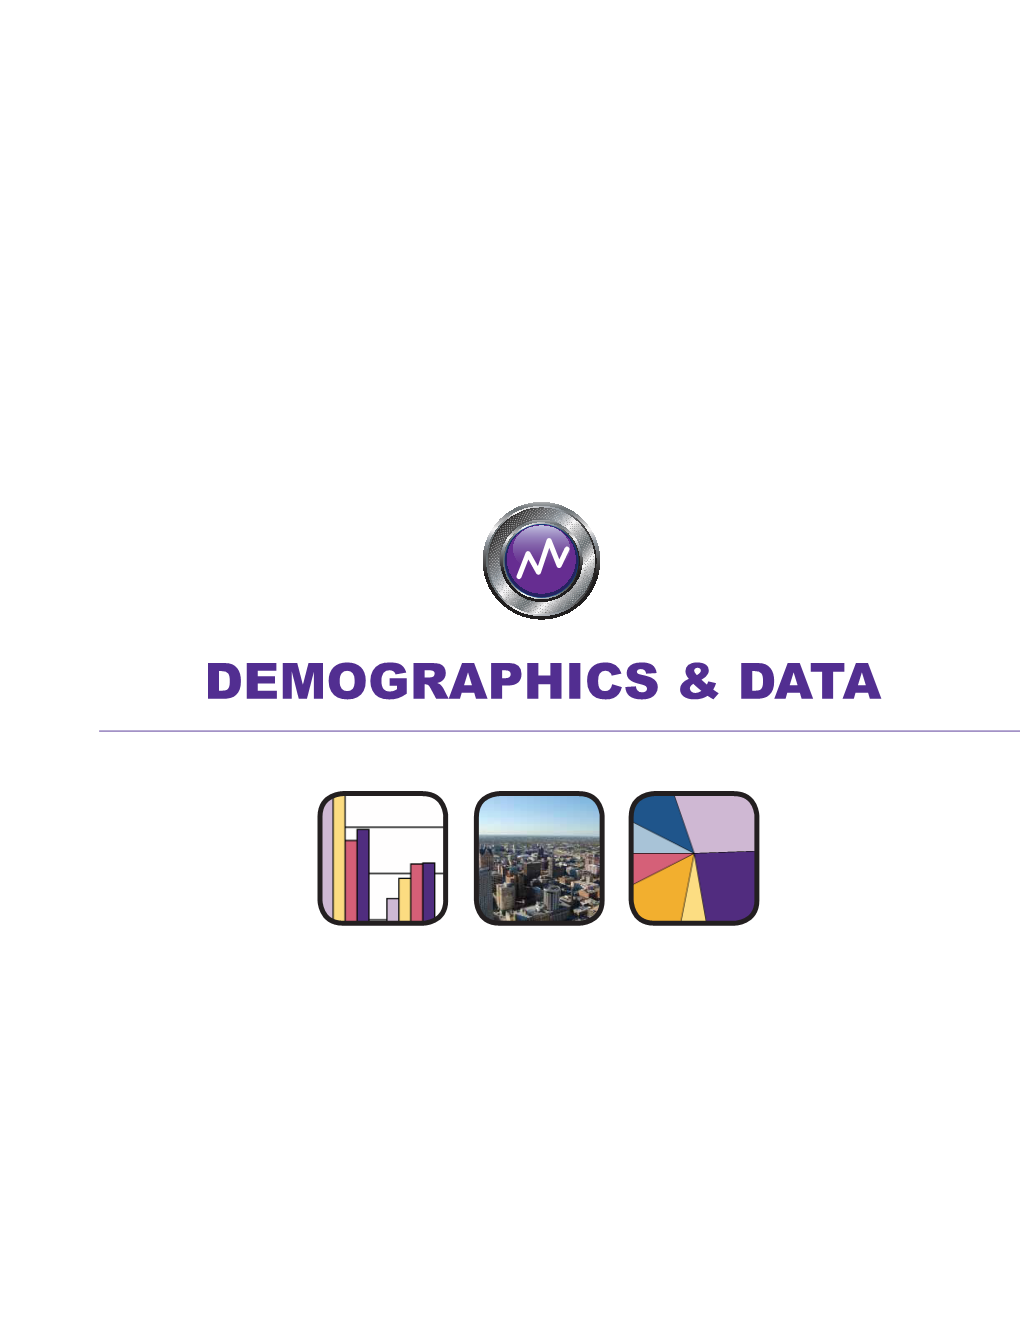 Demographics & Data